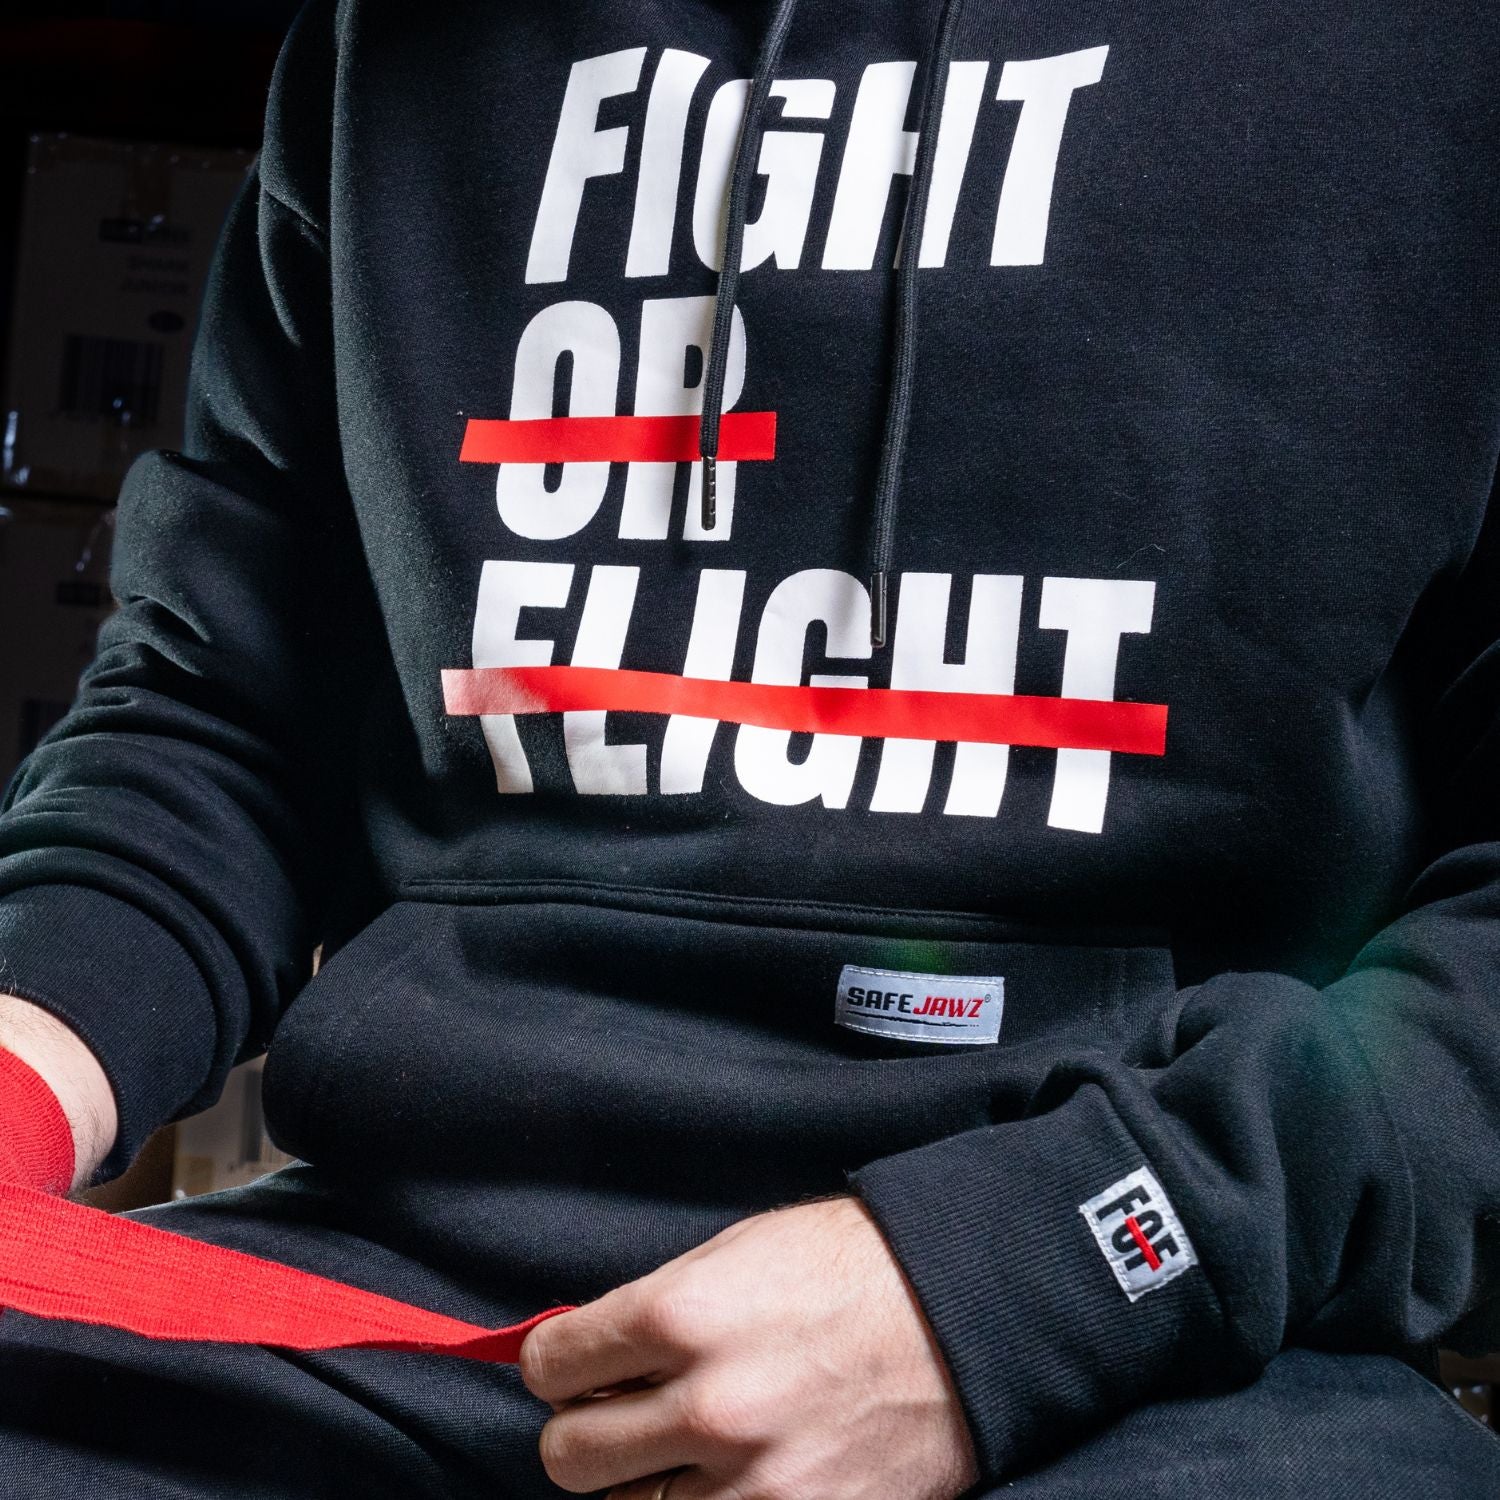 Fight or Flight Premium Hoodie